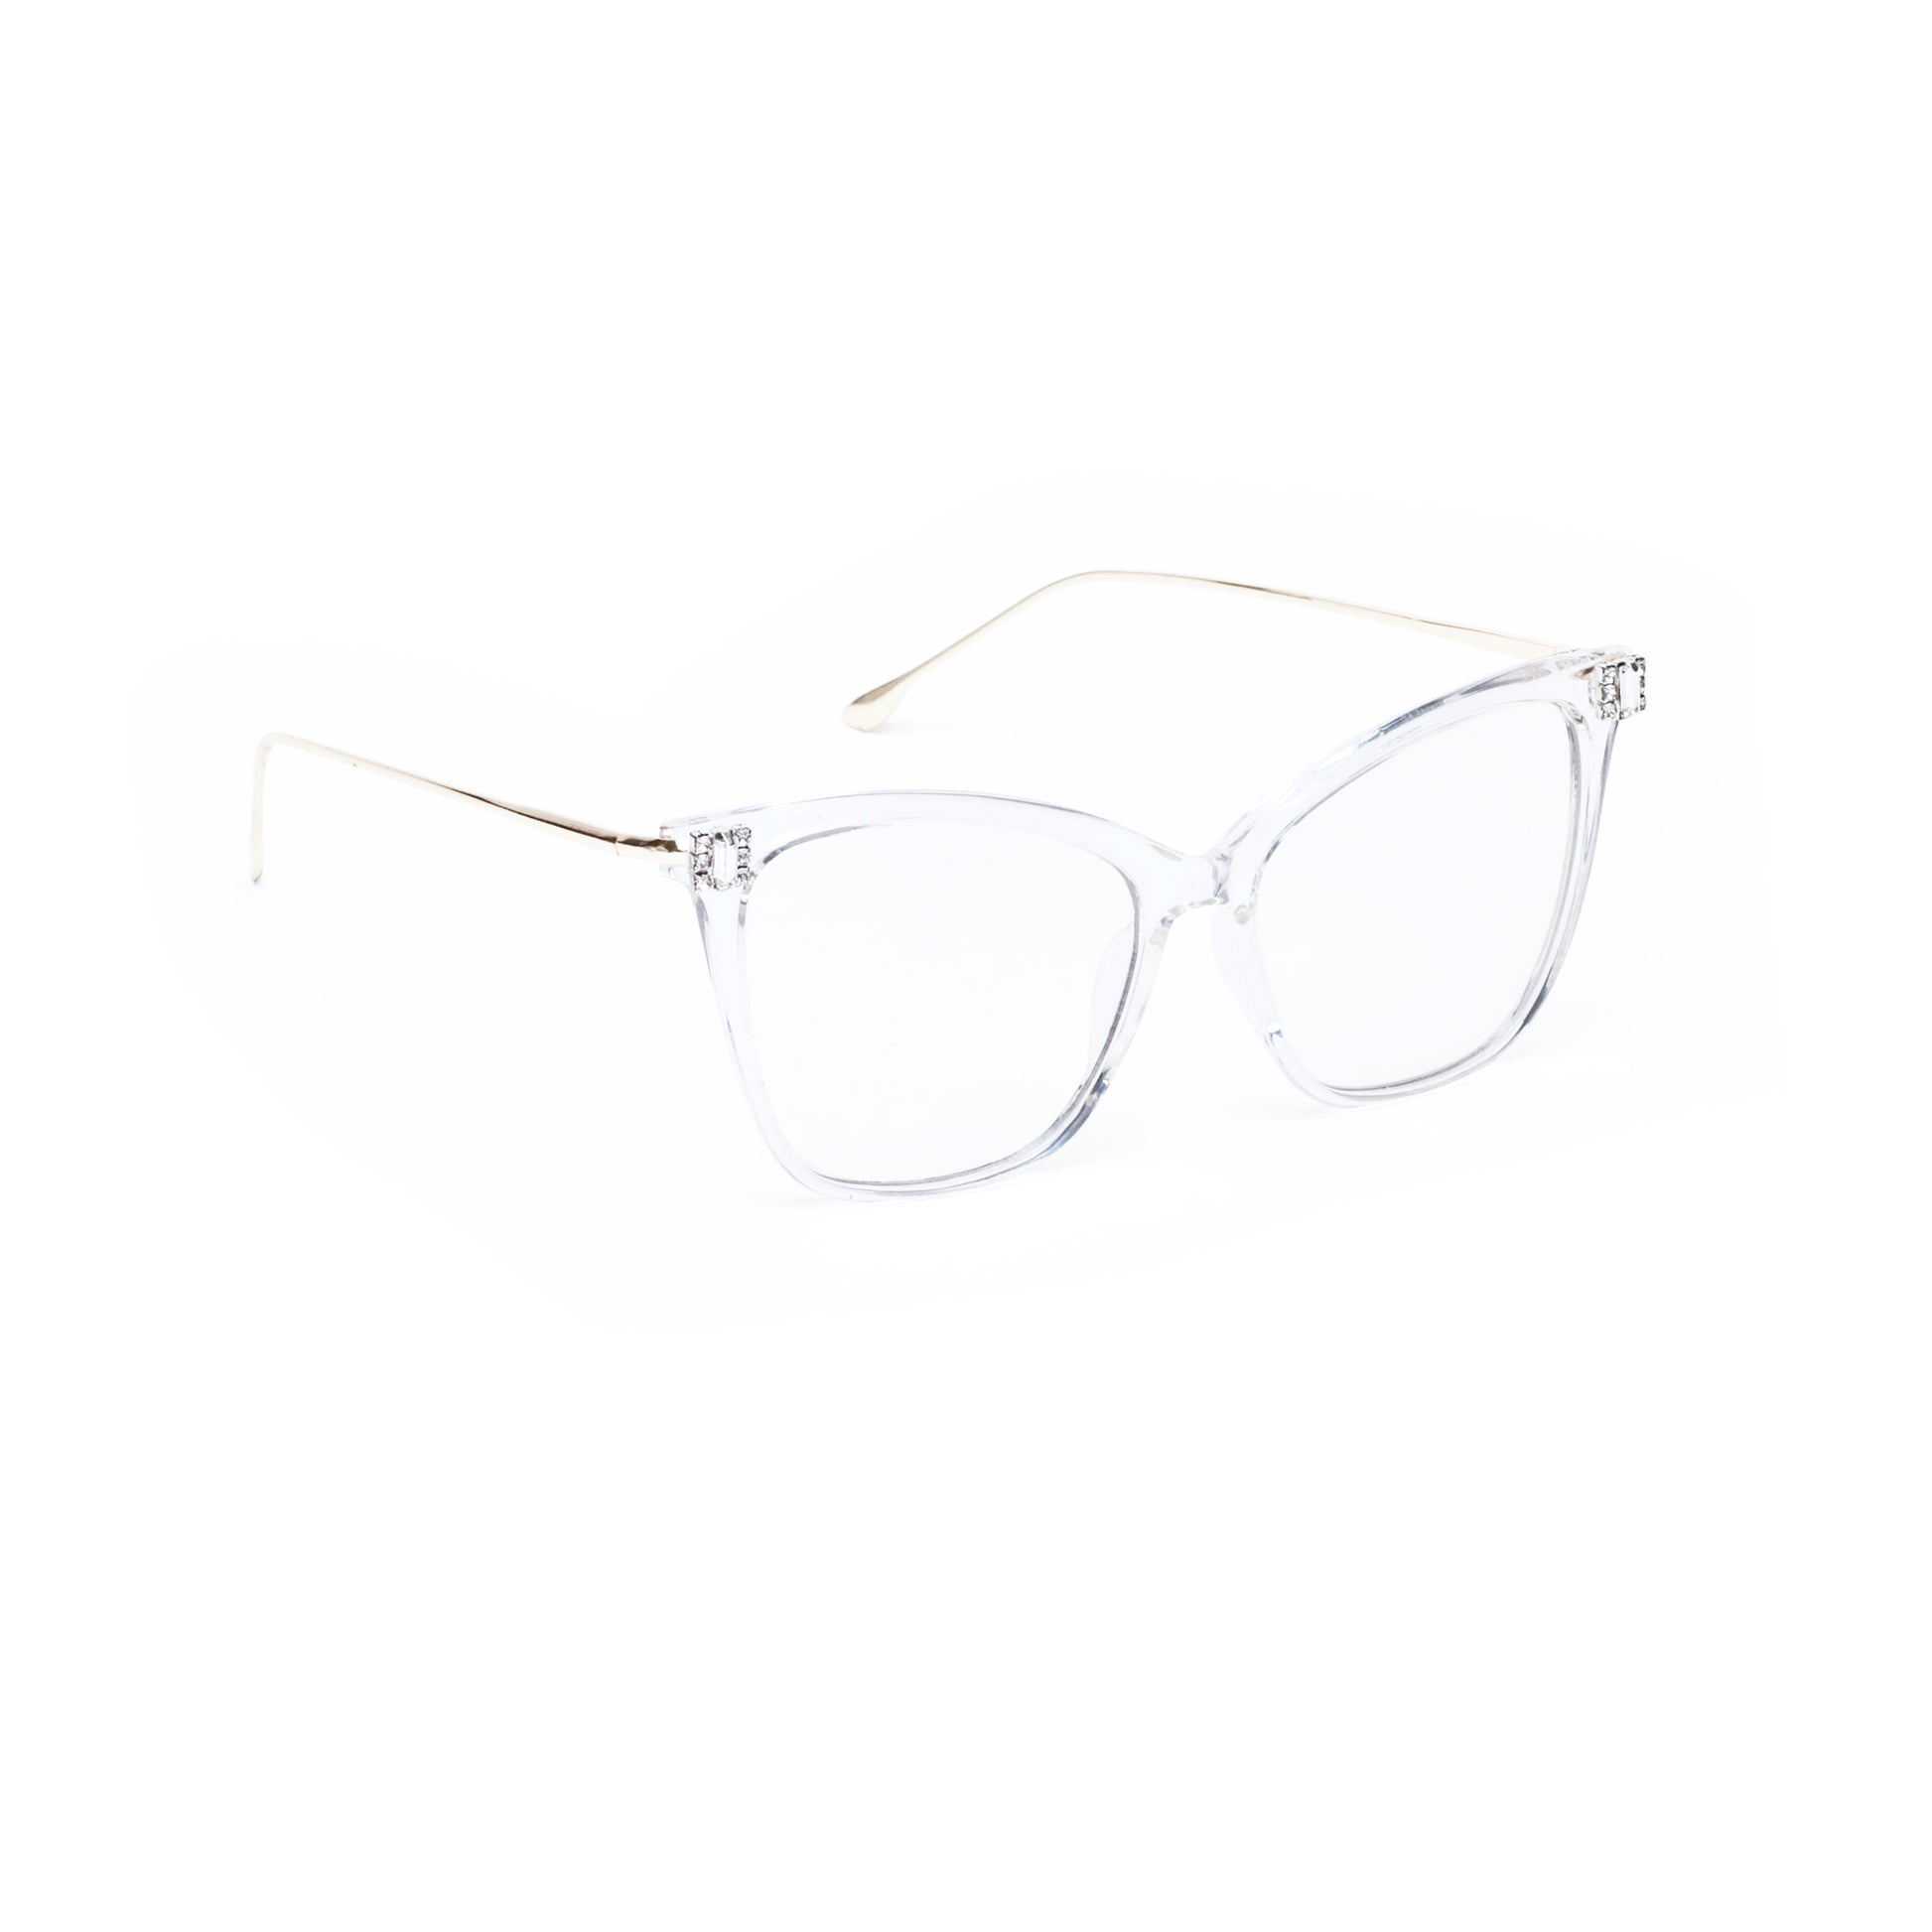 So Sophisticated  SUNNIES + OPTICS Sunglasses Collection- NRODA